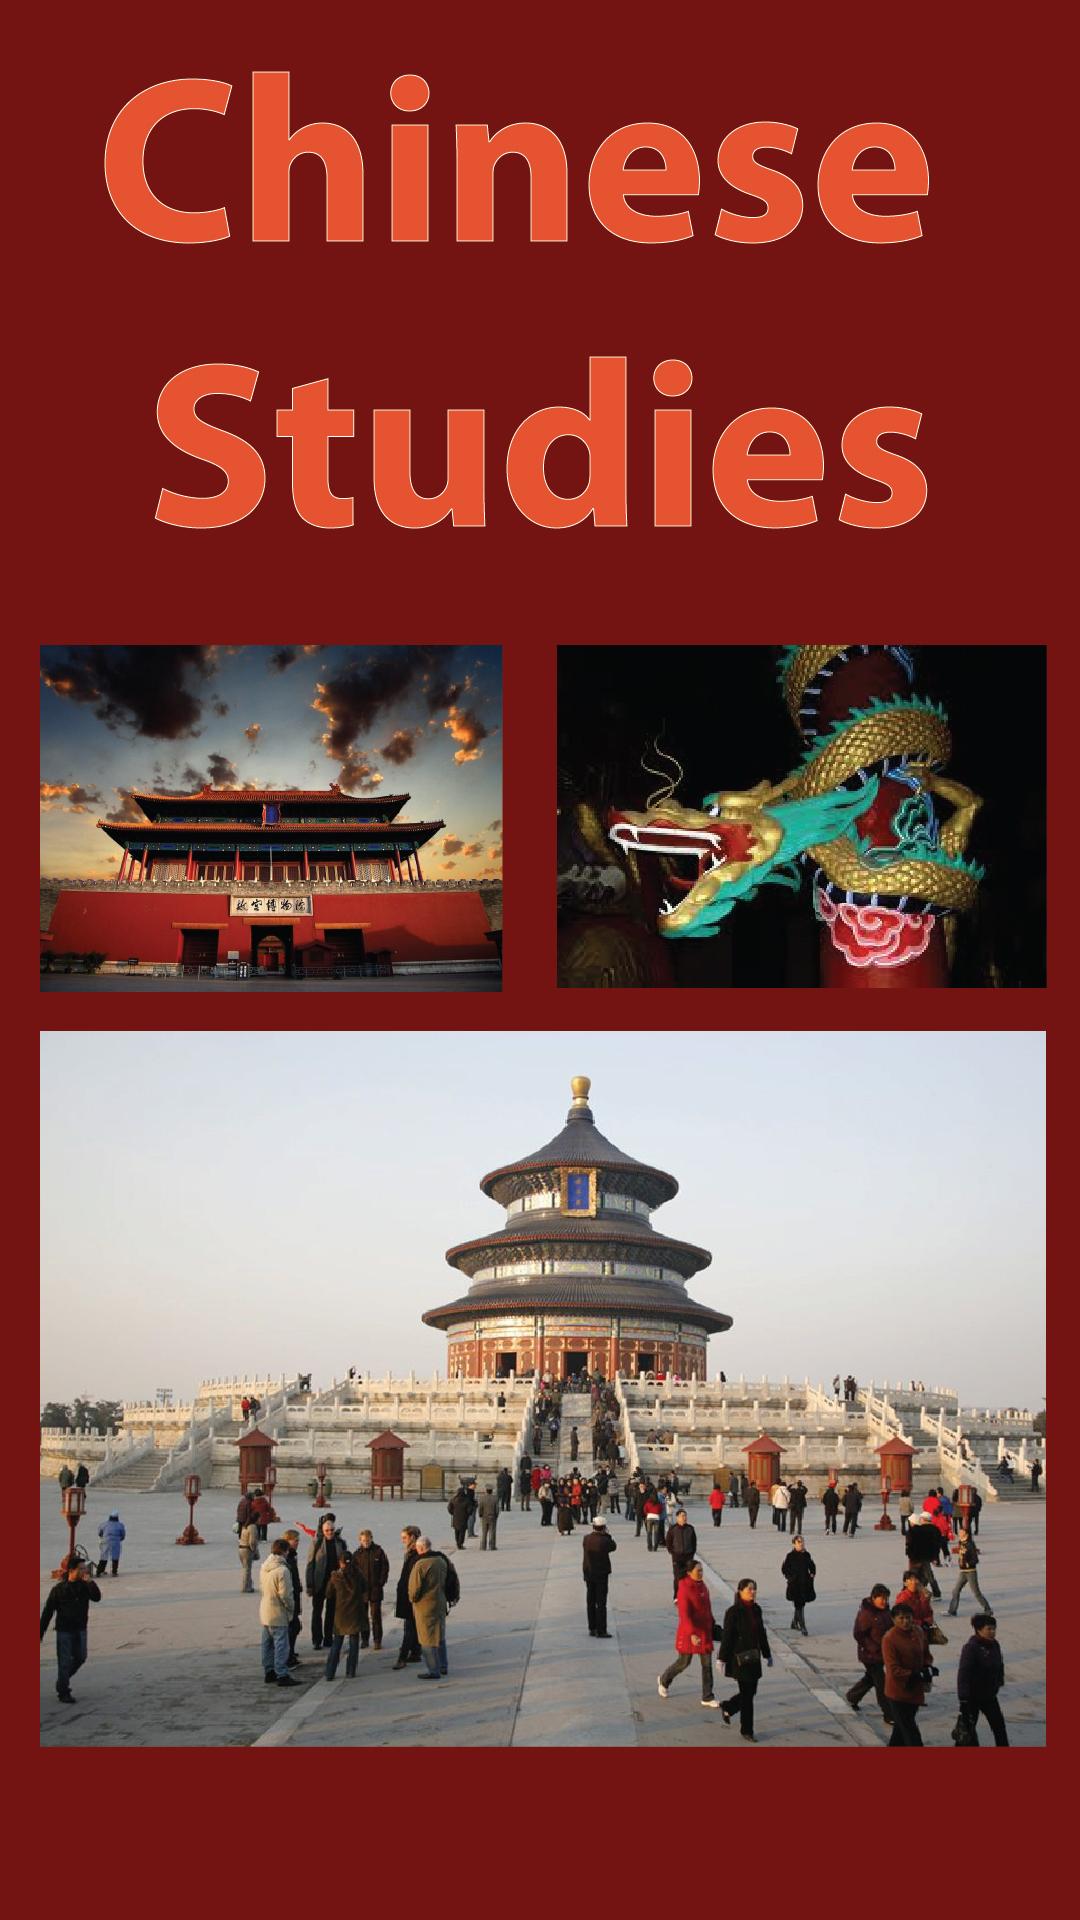 Chinese Studies Poster